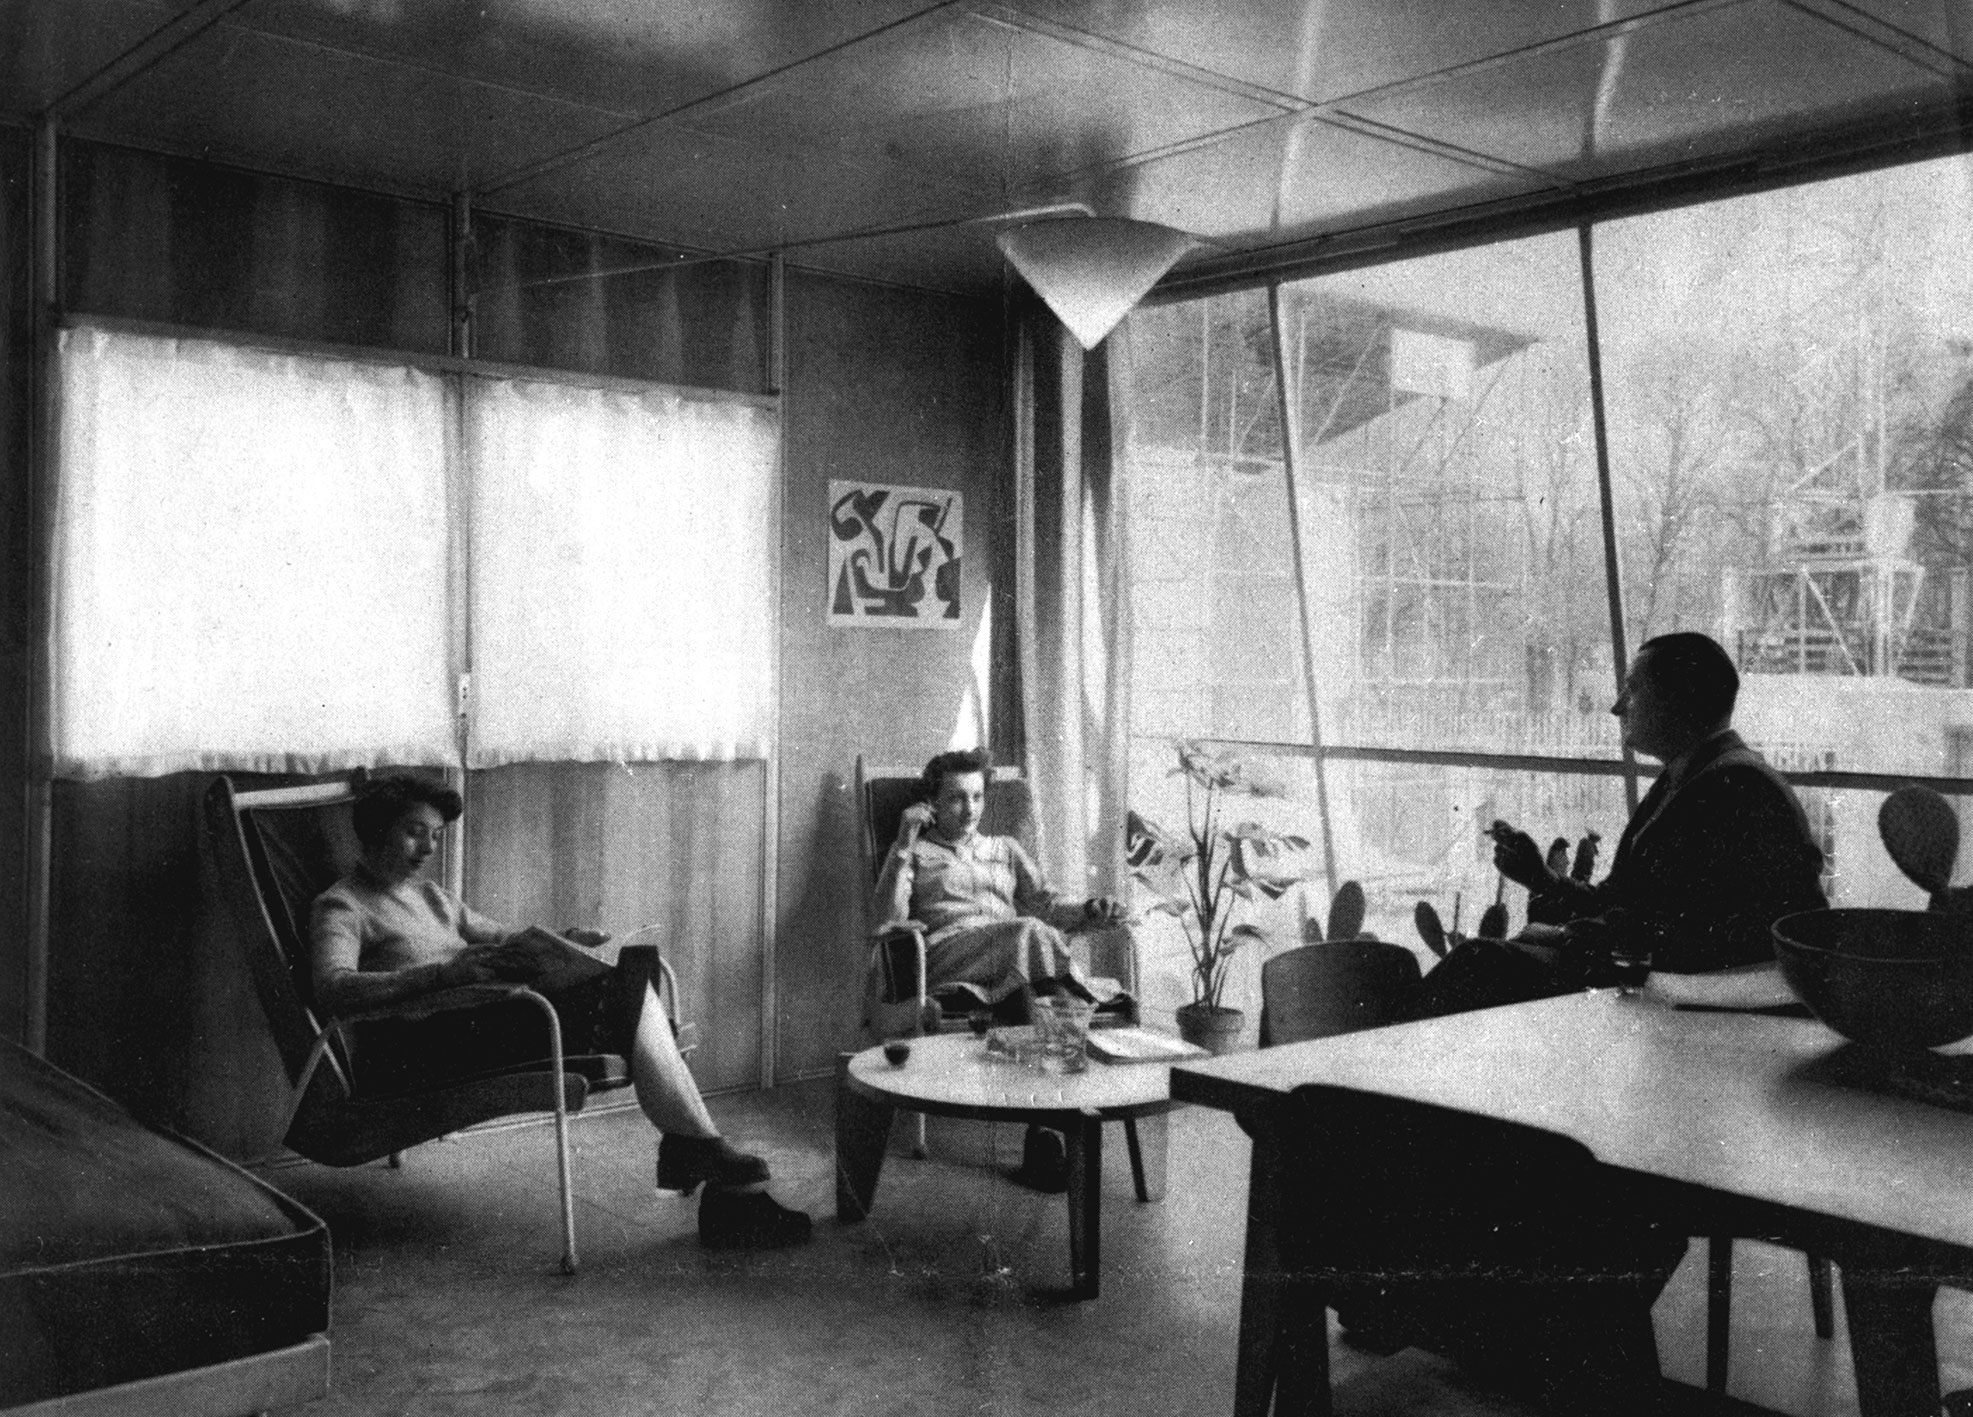 Prototype of the Métropole house presented by the Ateliers Jean Prouvé at the Salon des Arts Ménagers, Paris, 1950 (architect H. Prouvé). Living room corner furnished with Visiteur FV 12 armchairs.